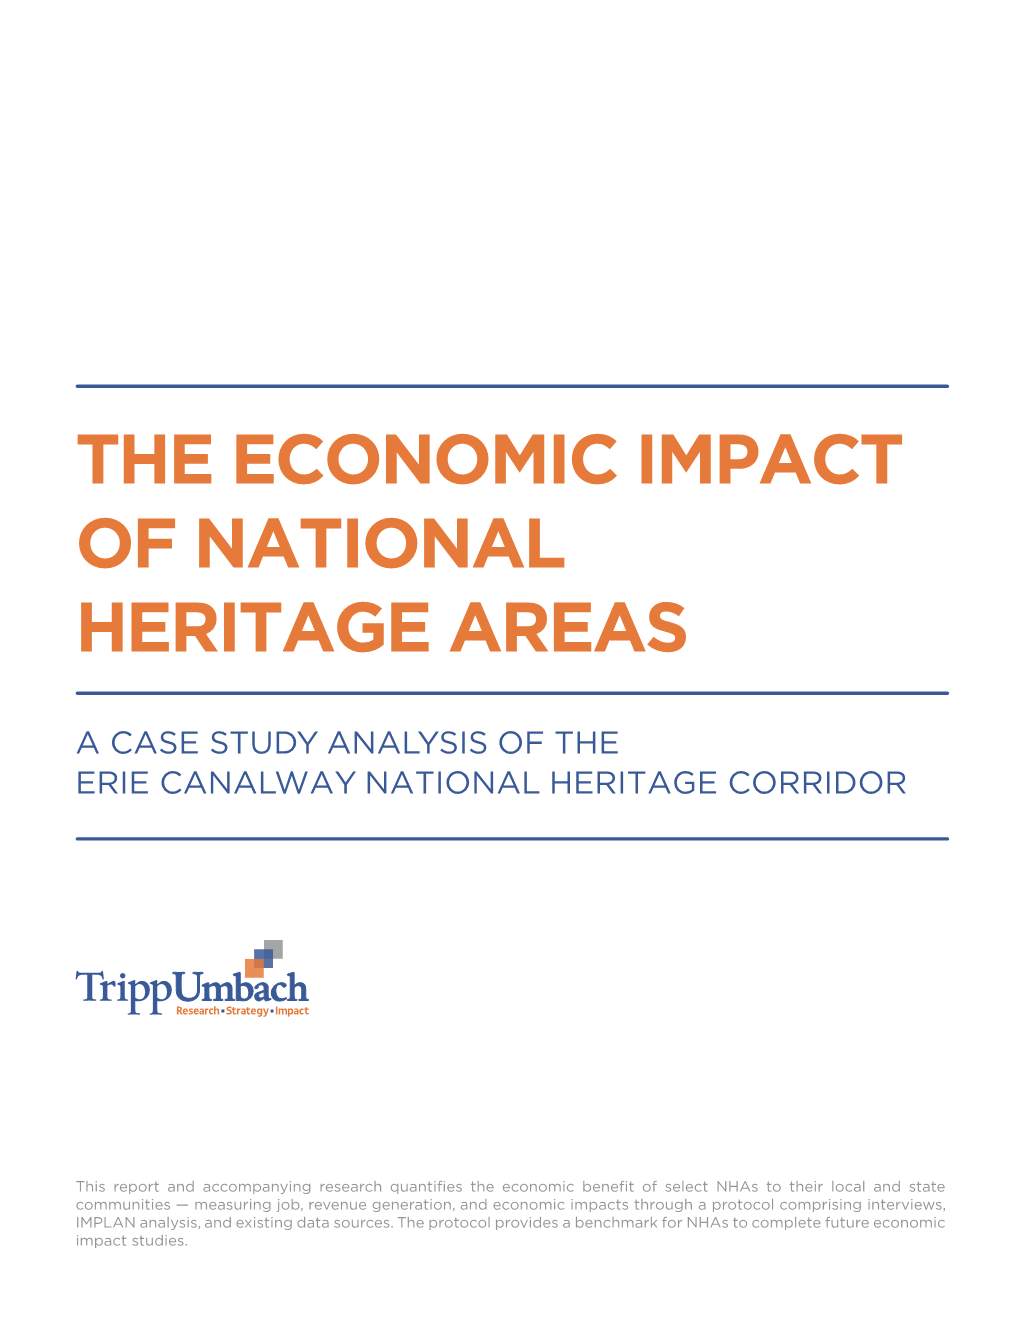 Economic Impact of National Heritage Areas